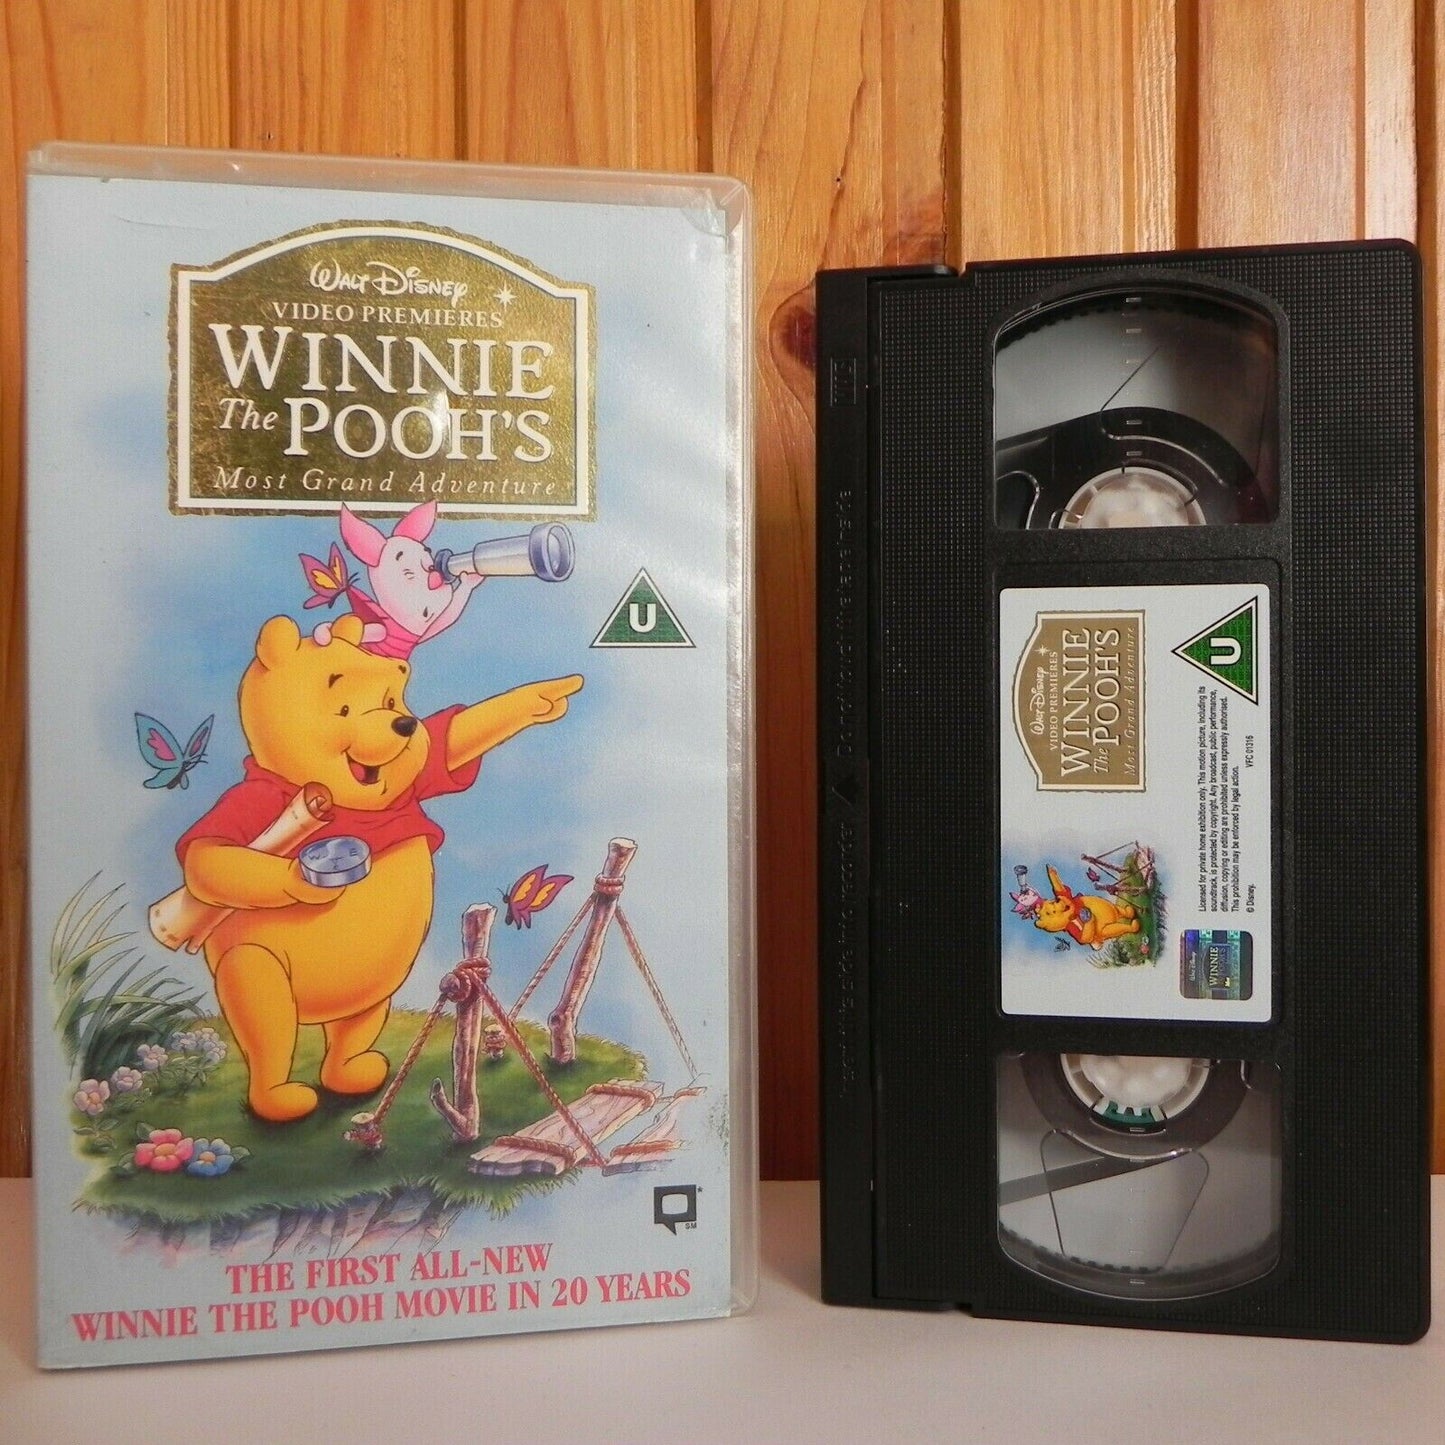 Winnie The Pooh's Most Grand Adventure - Walt Disney - Animated - Kids - Pal VHS-